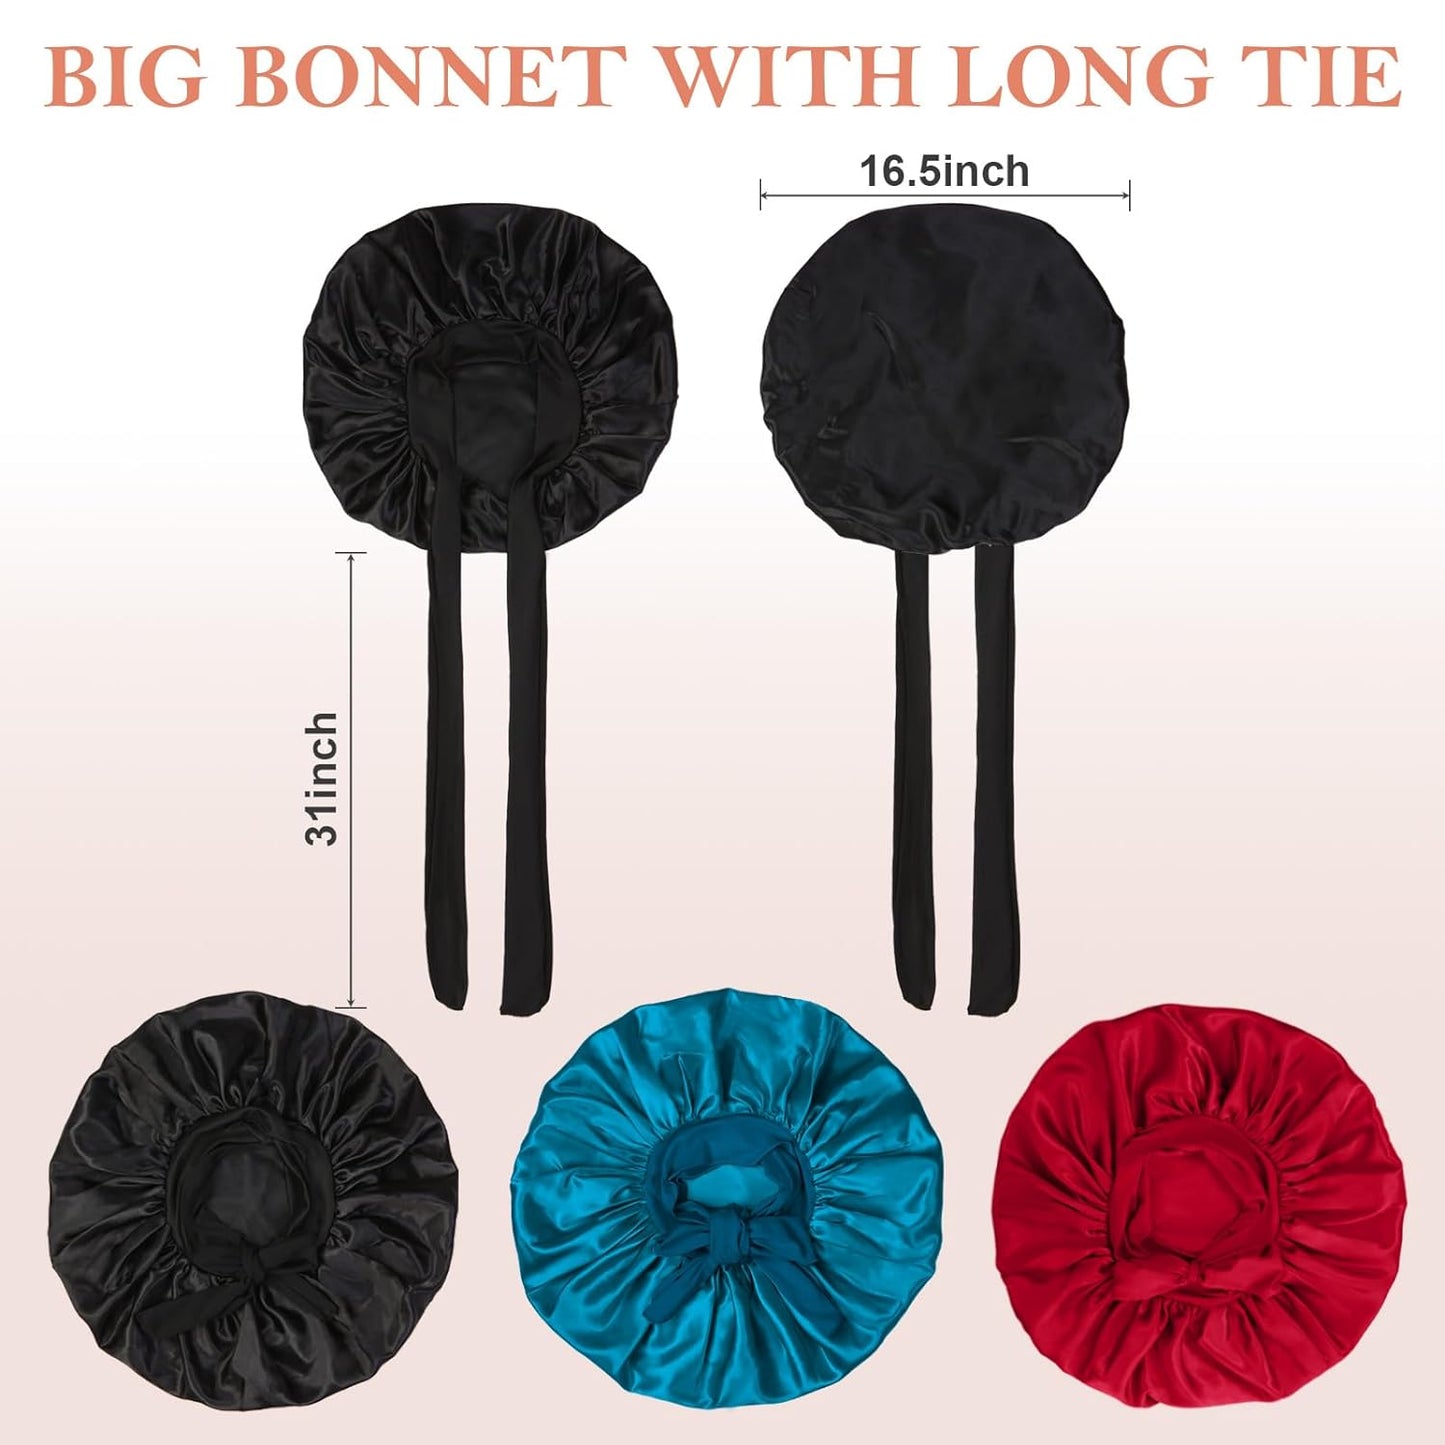 3Pcs Bonnet Silk Bonnet for Sleeping, Satin Bonnet for Sleeping Extra Large Hair Bonnets for Sleeping Black Curly Hair Women Jumbo Bonnet with Tie Band Braids